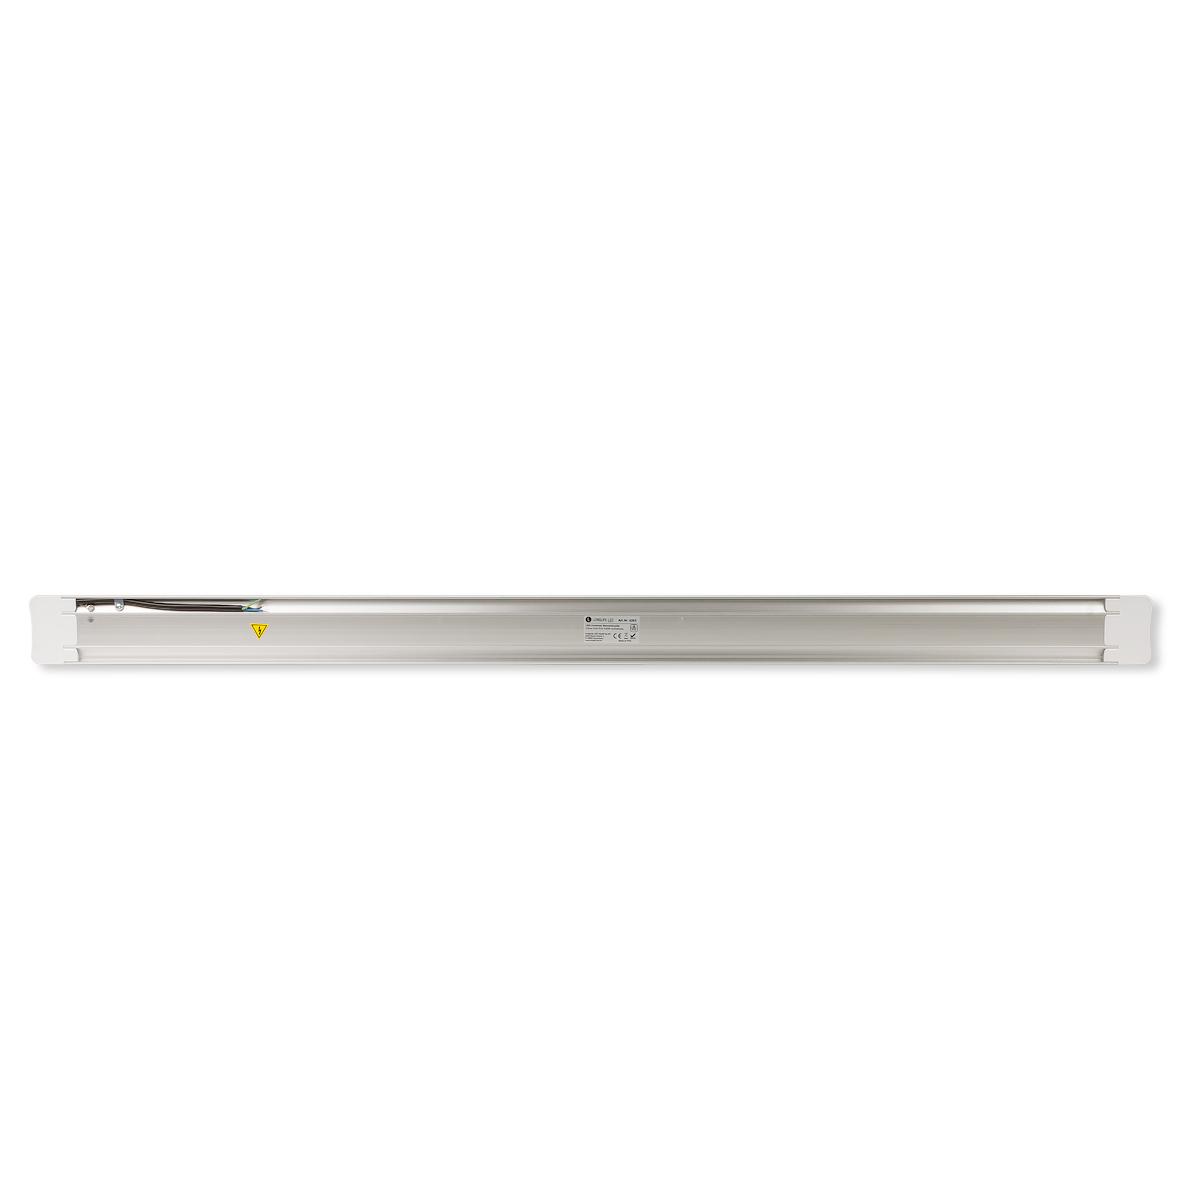 LED Lichtleiste Wannenleuchte Neutralweiss 4000K IP20 - Ausführung: 124,5cm 33W